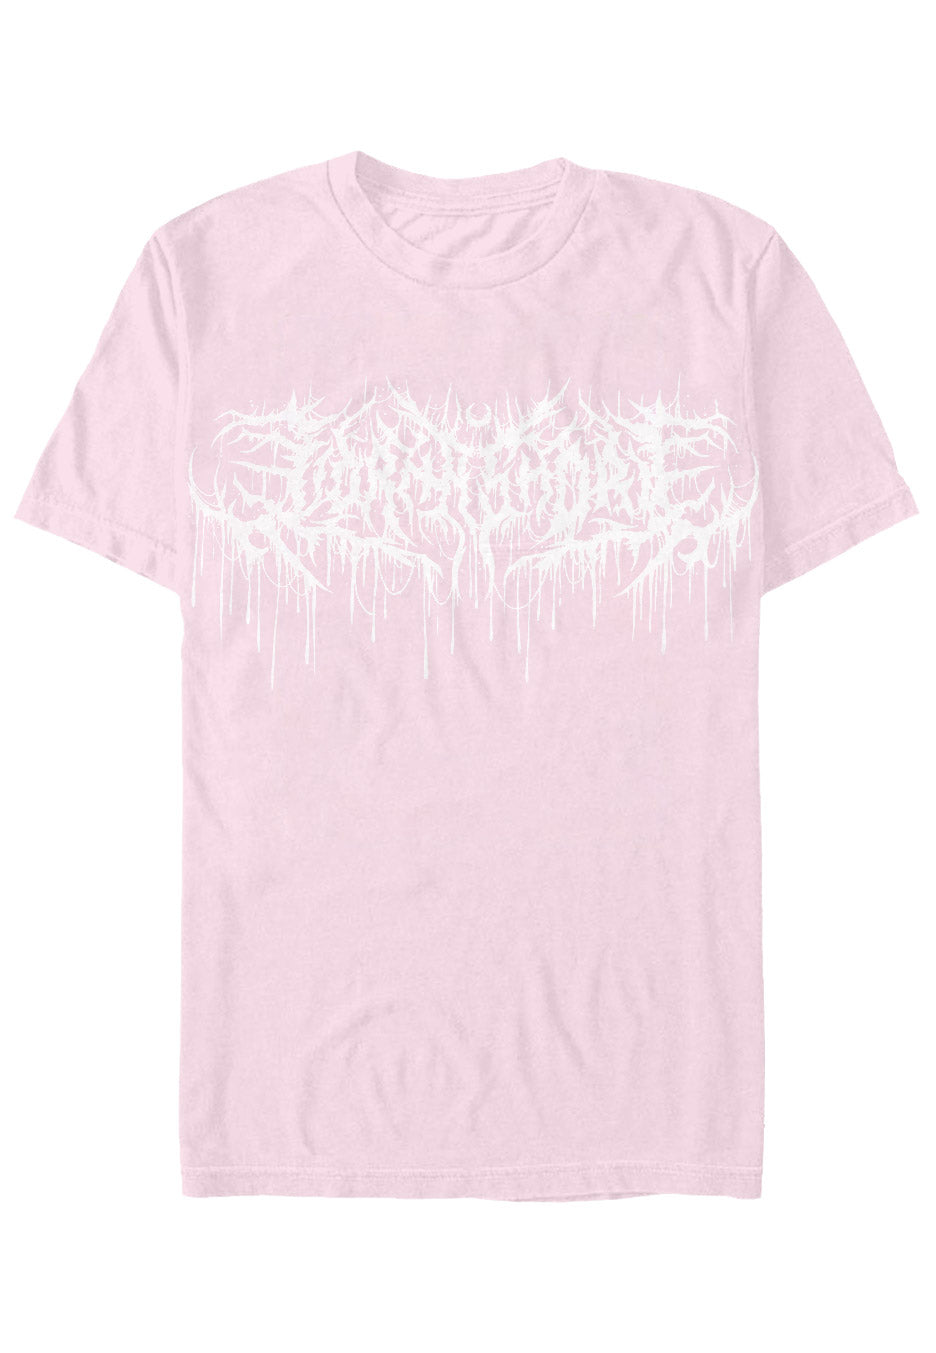 Lorna Shore - Pain Remains Light Pink - T-Shirt